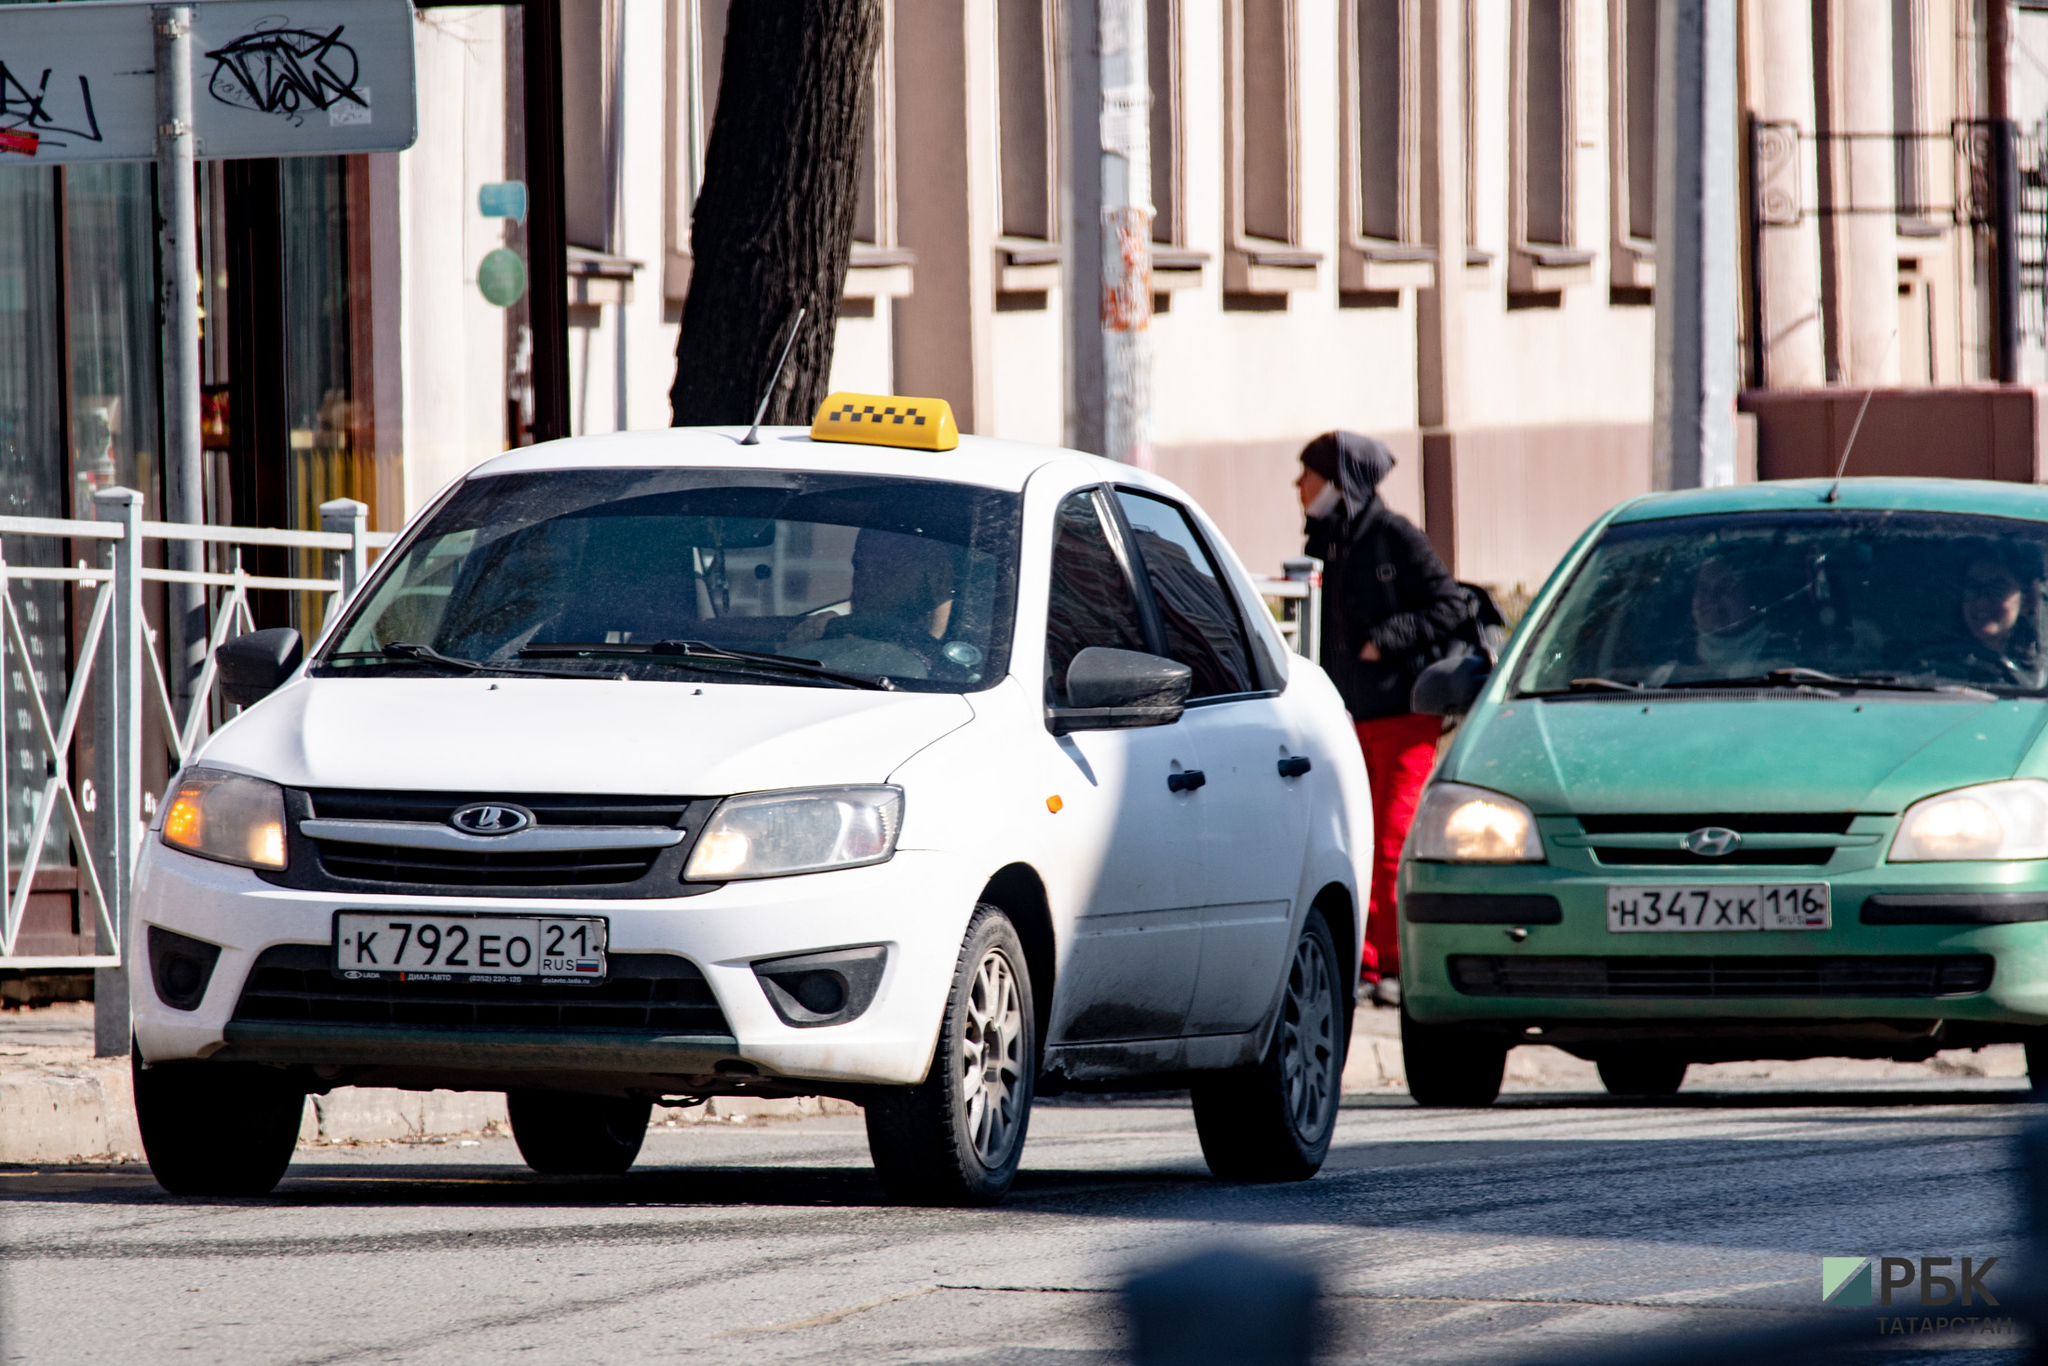 «Челнок» из Челнов: в РТ запускают сервис-гибрид транспорта и такси